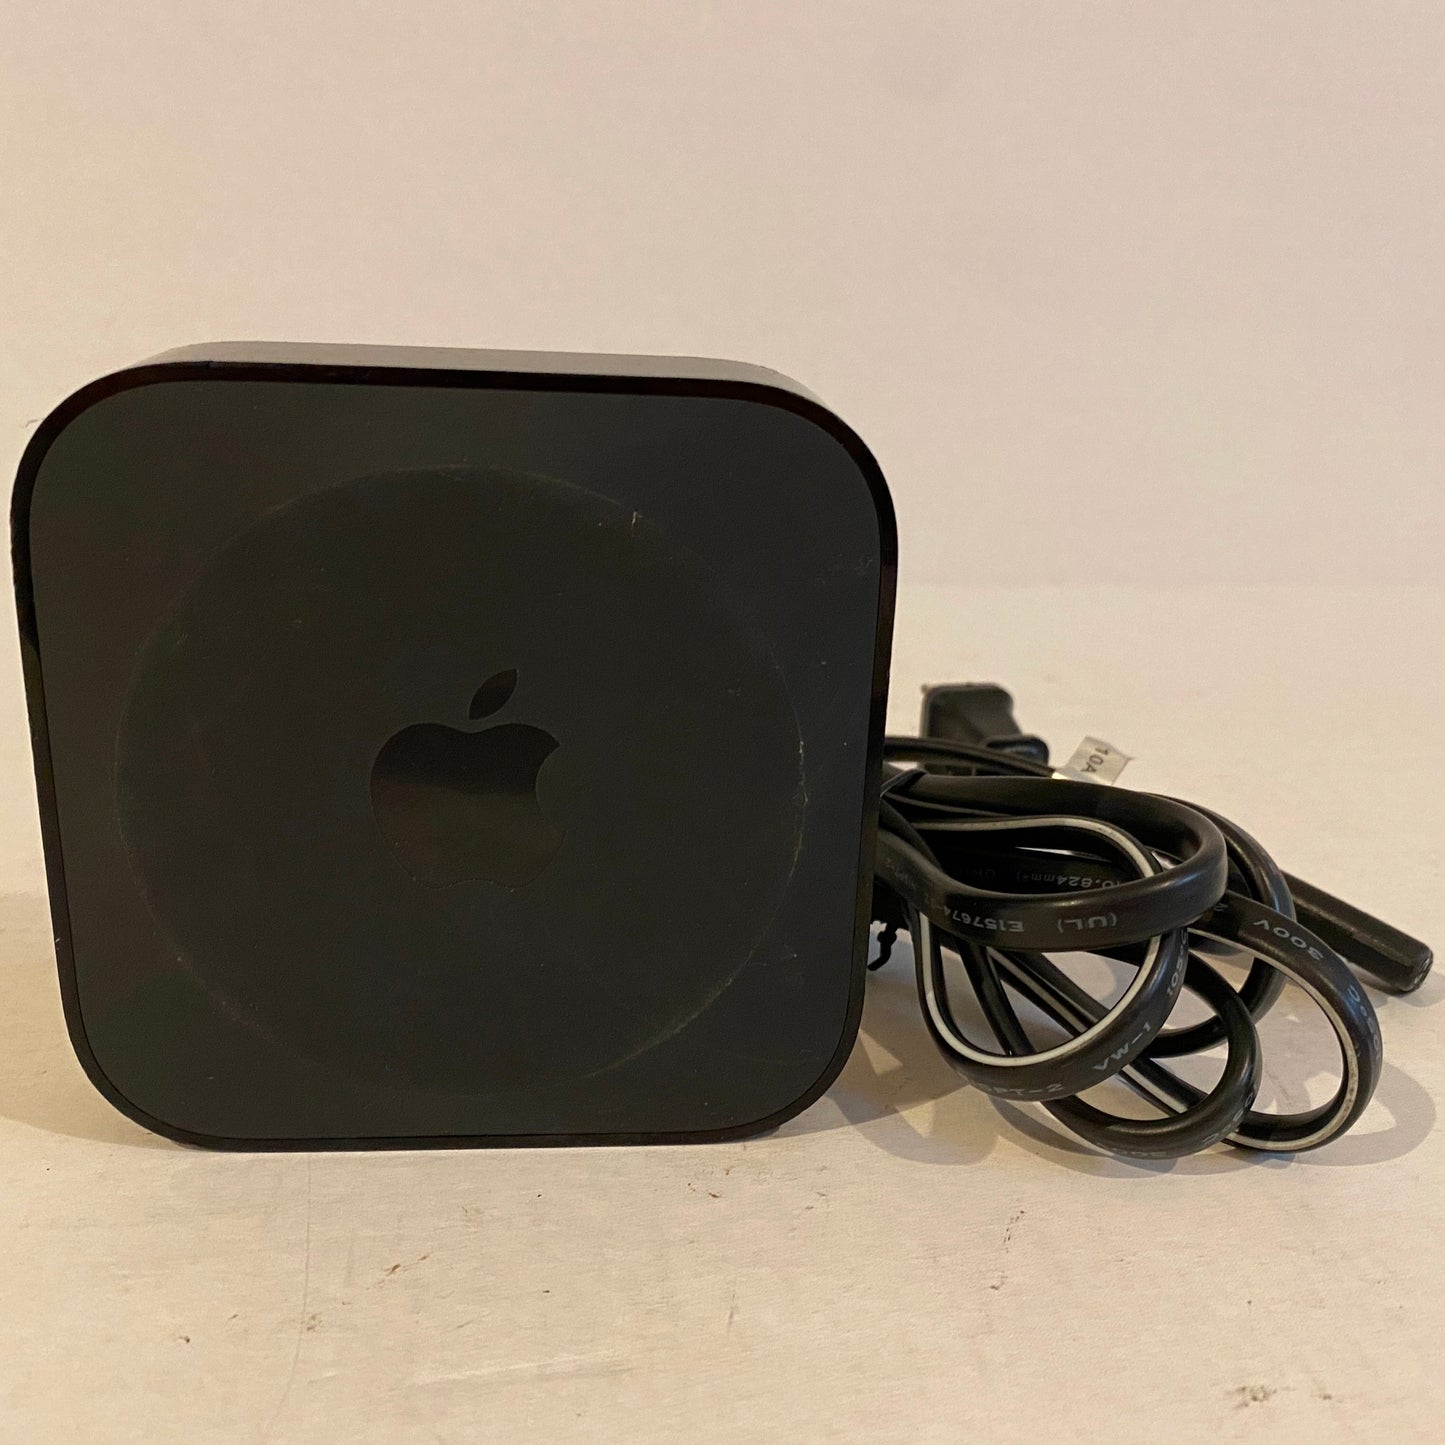 Apple TV (3rd generation) - A1469